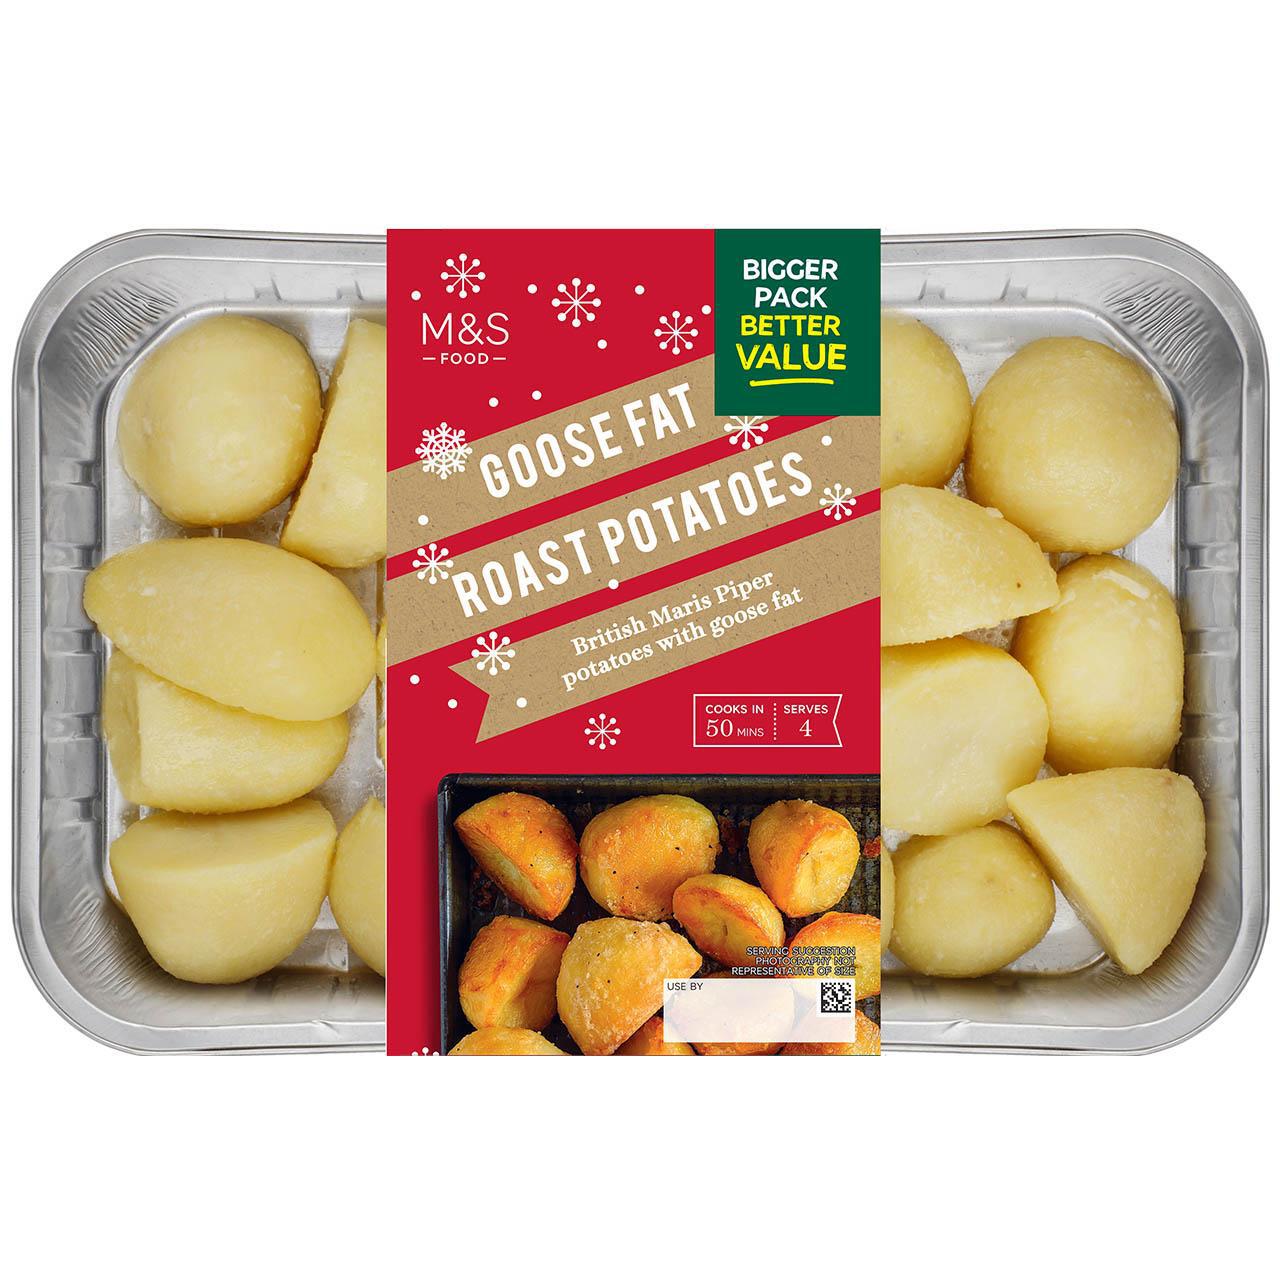 M&S Goose Fat Roasting Potatoes Family Pack 800g